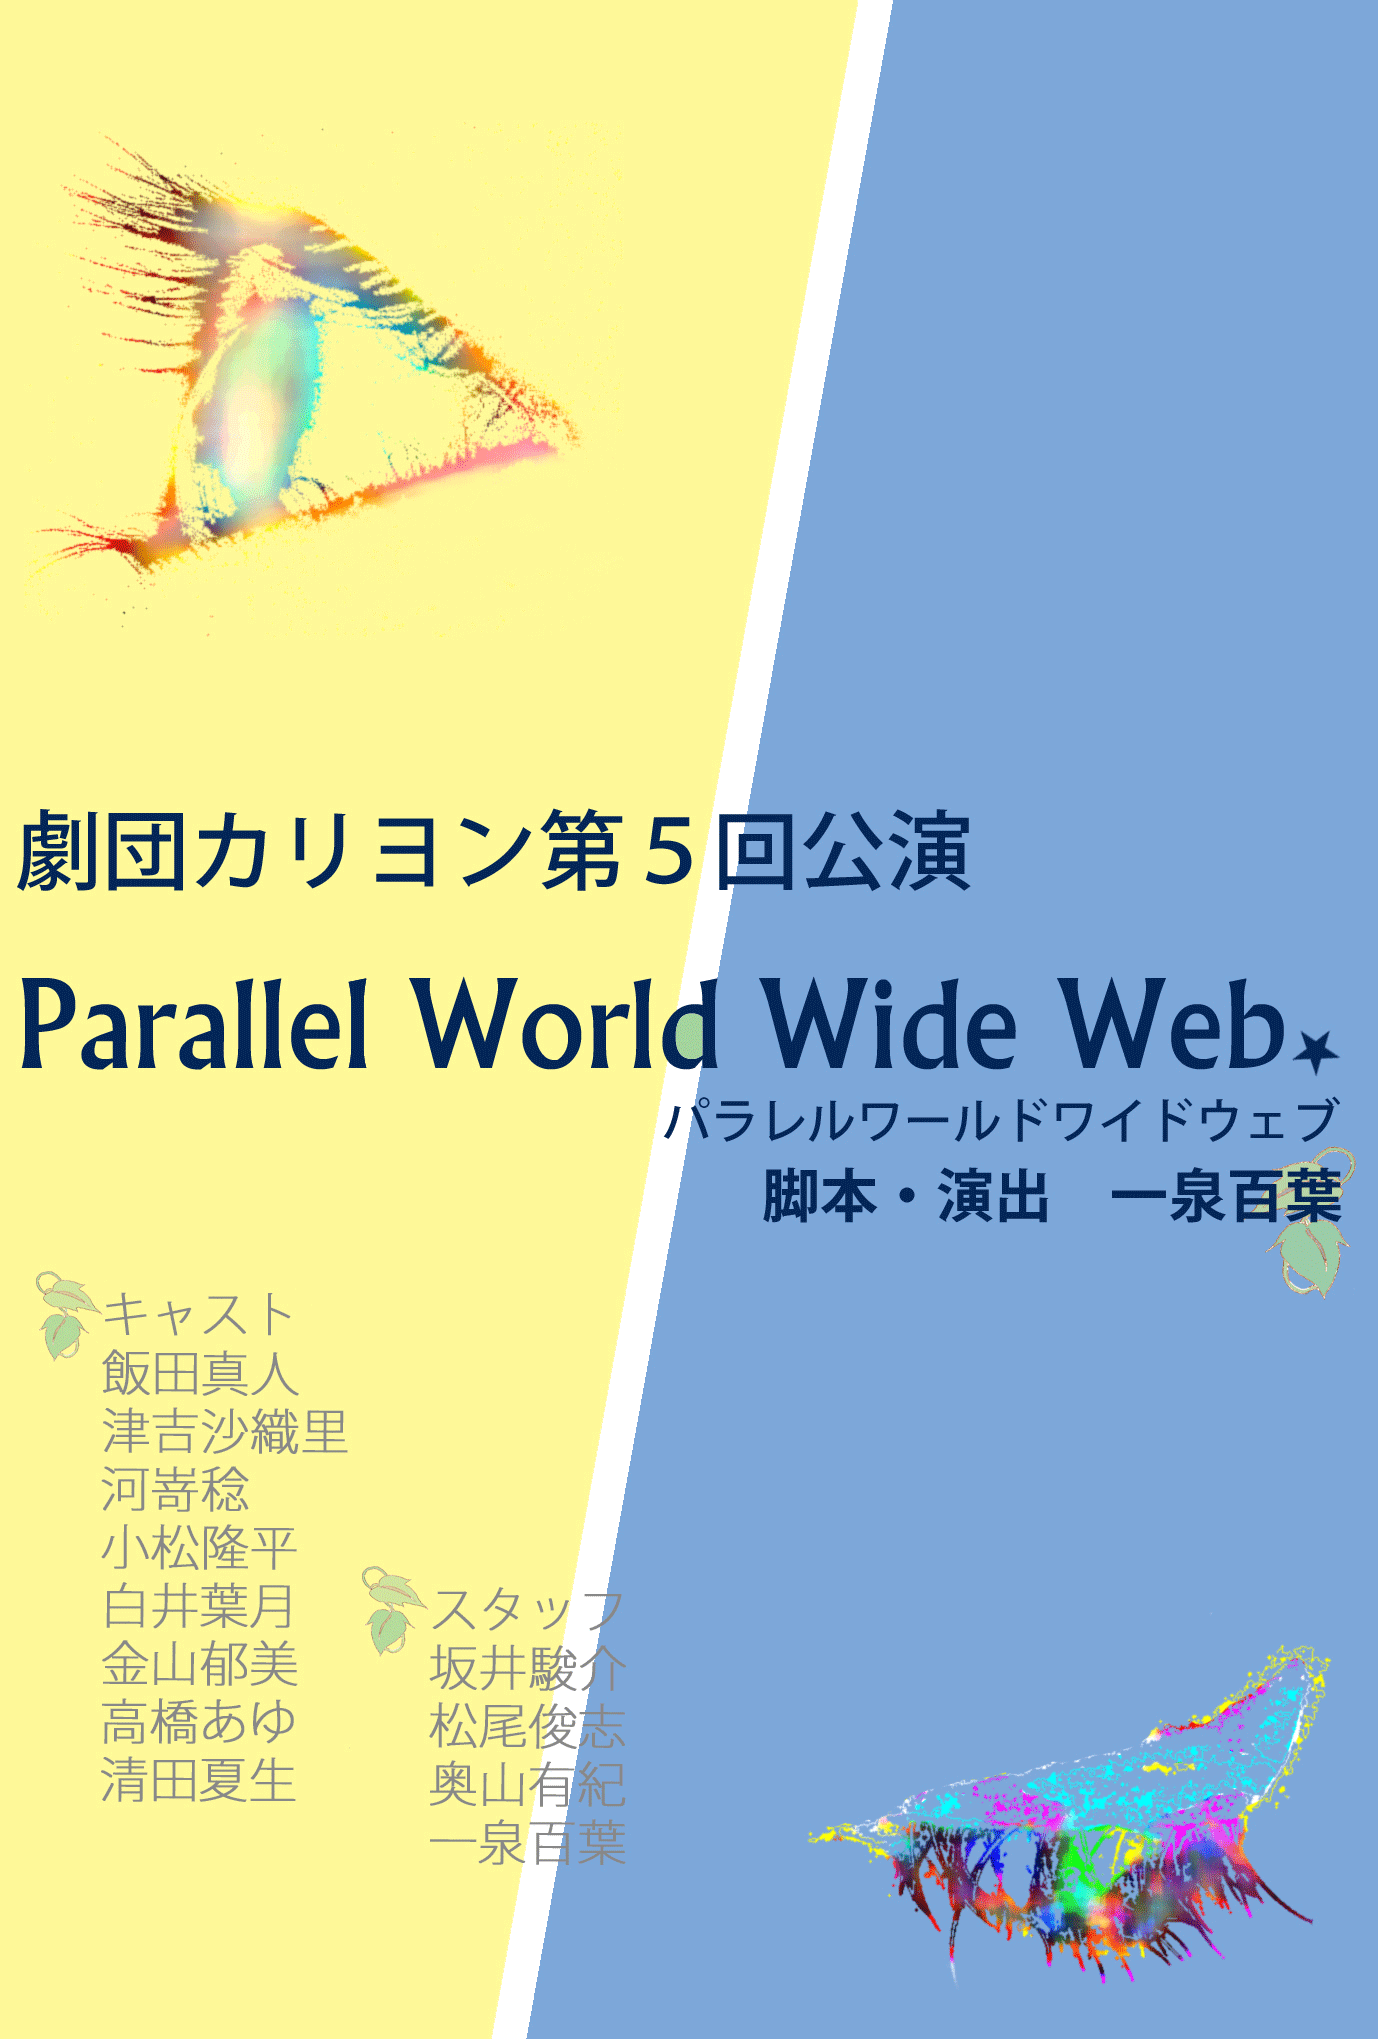 uParallel World Wide Webv